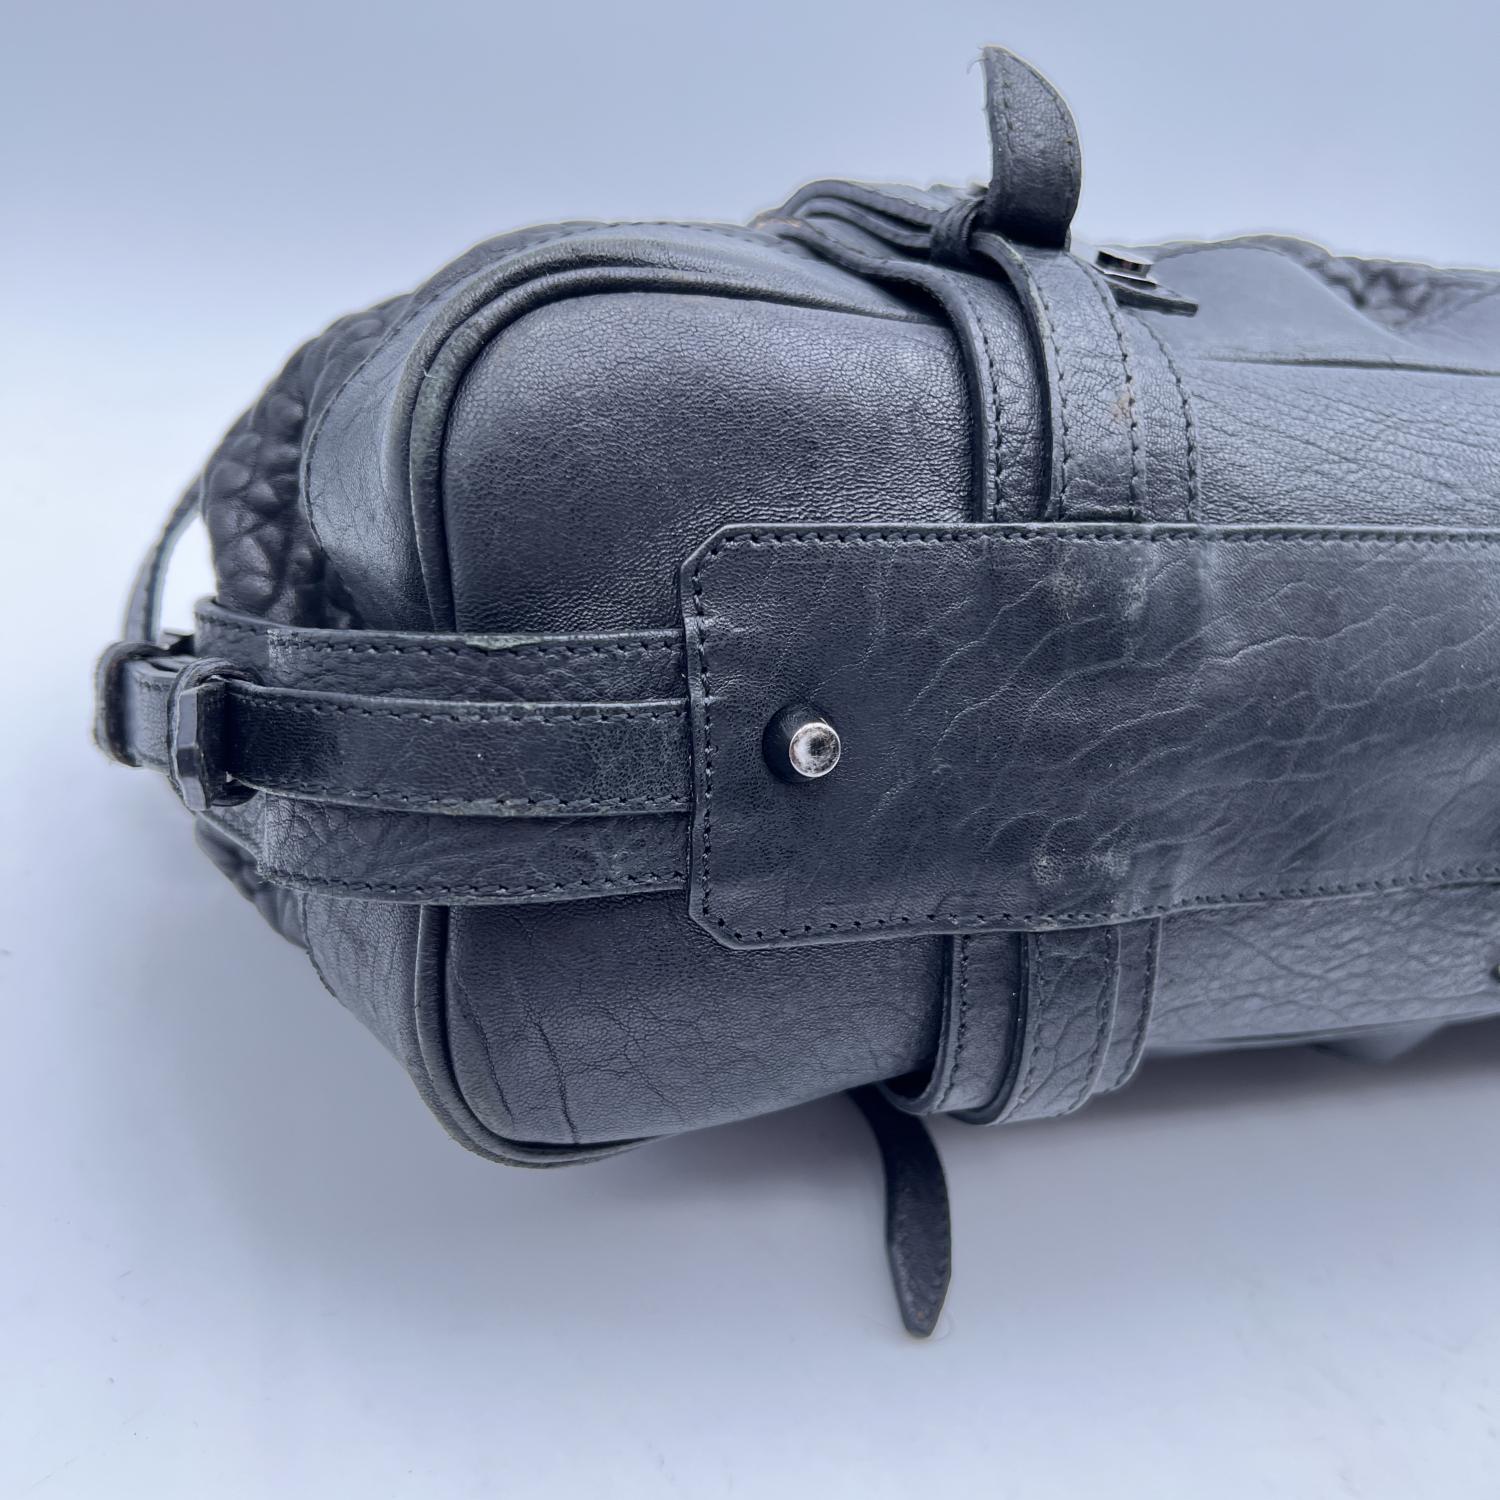 Burberry Black Leather Belted Rowan Tote Bag Satchel Handbag 3